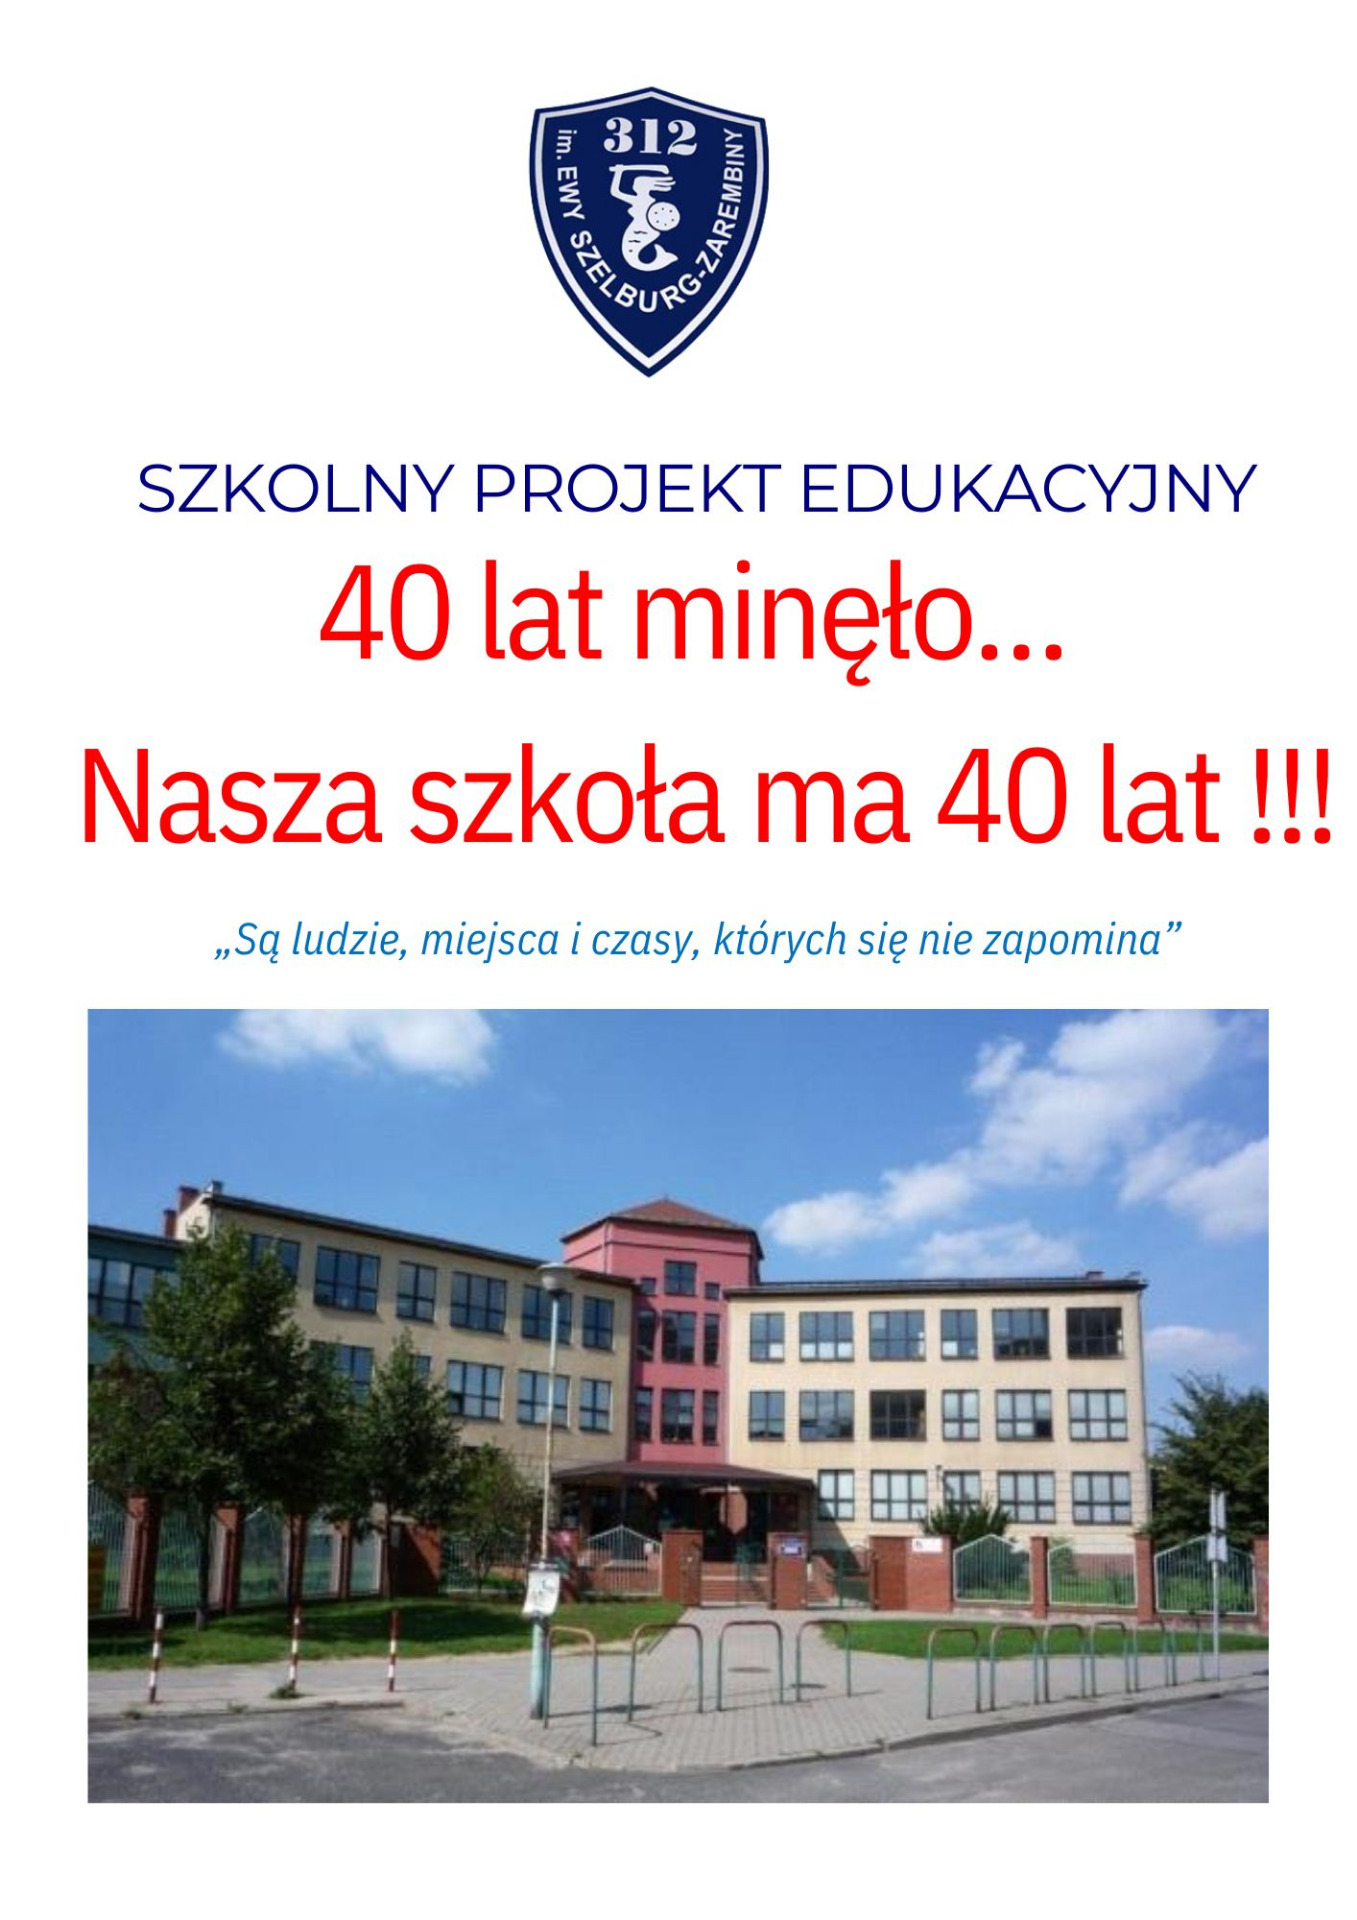  Projekt edukacyjny - 40 lat minęło... Nasza szkoła ma 40 lat!!! - Obrazek 1